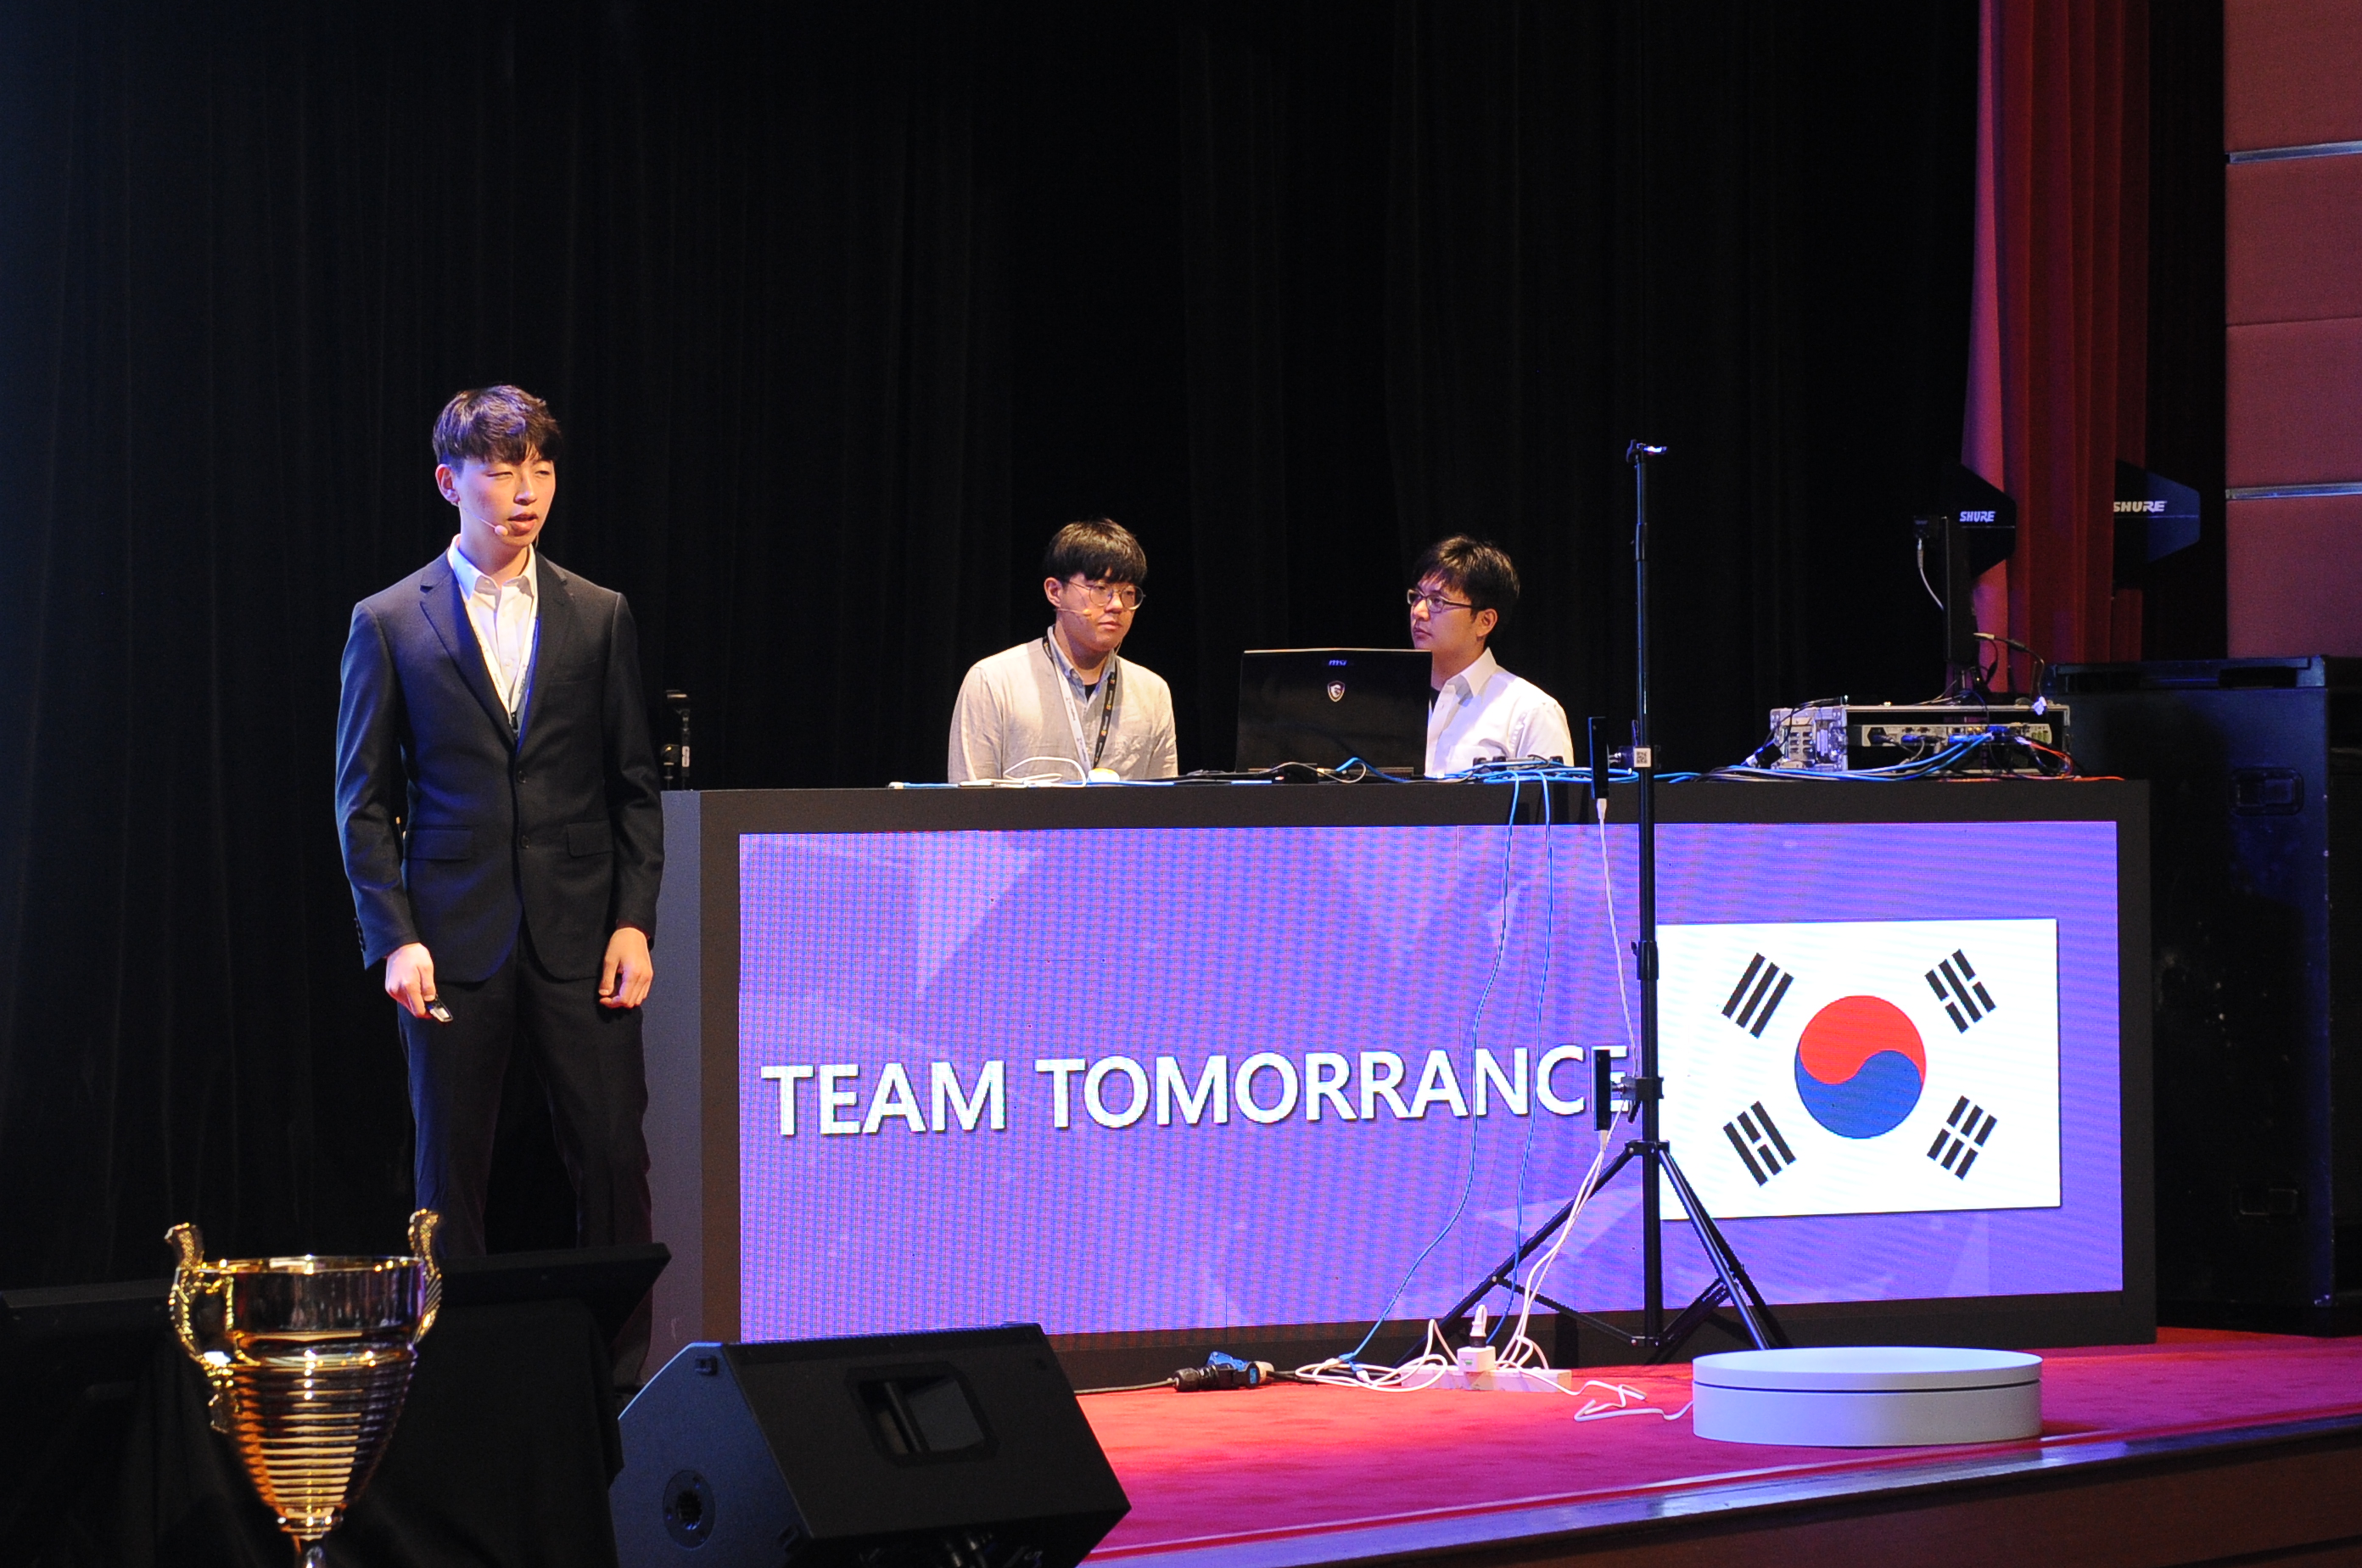 Team Tomorrance - Korea